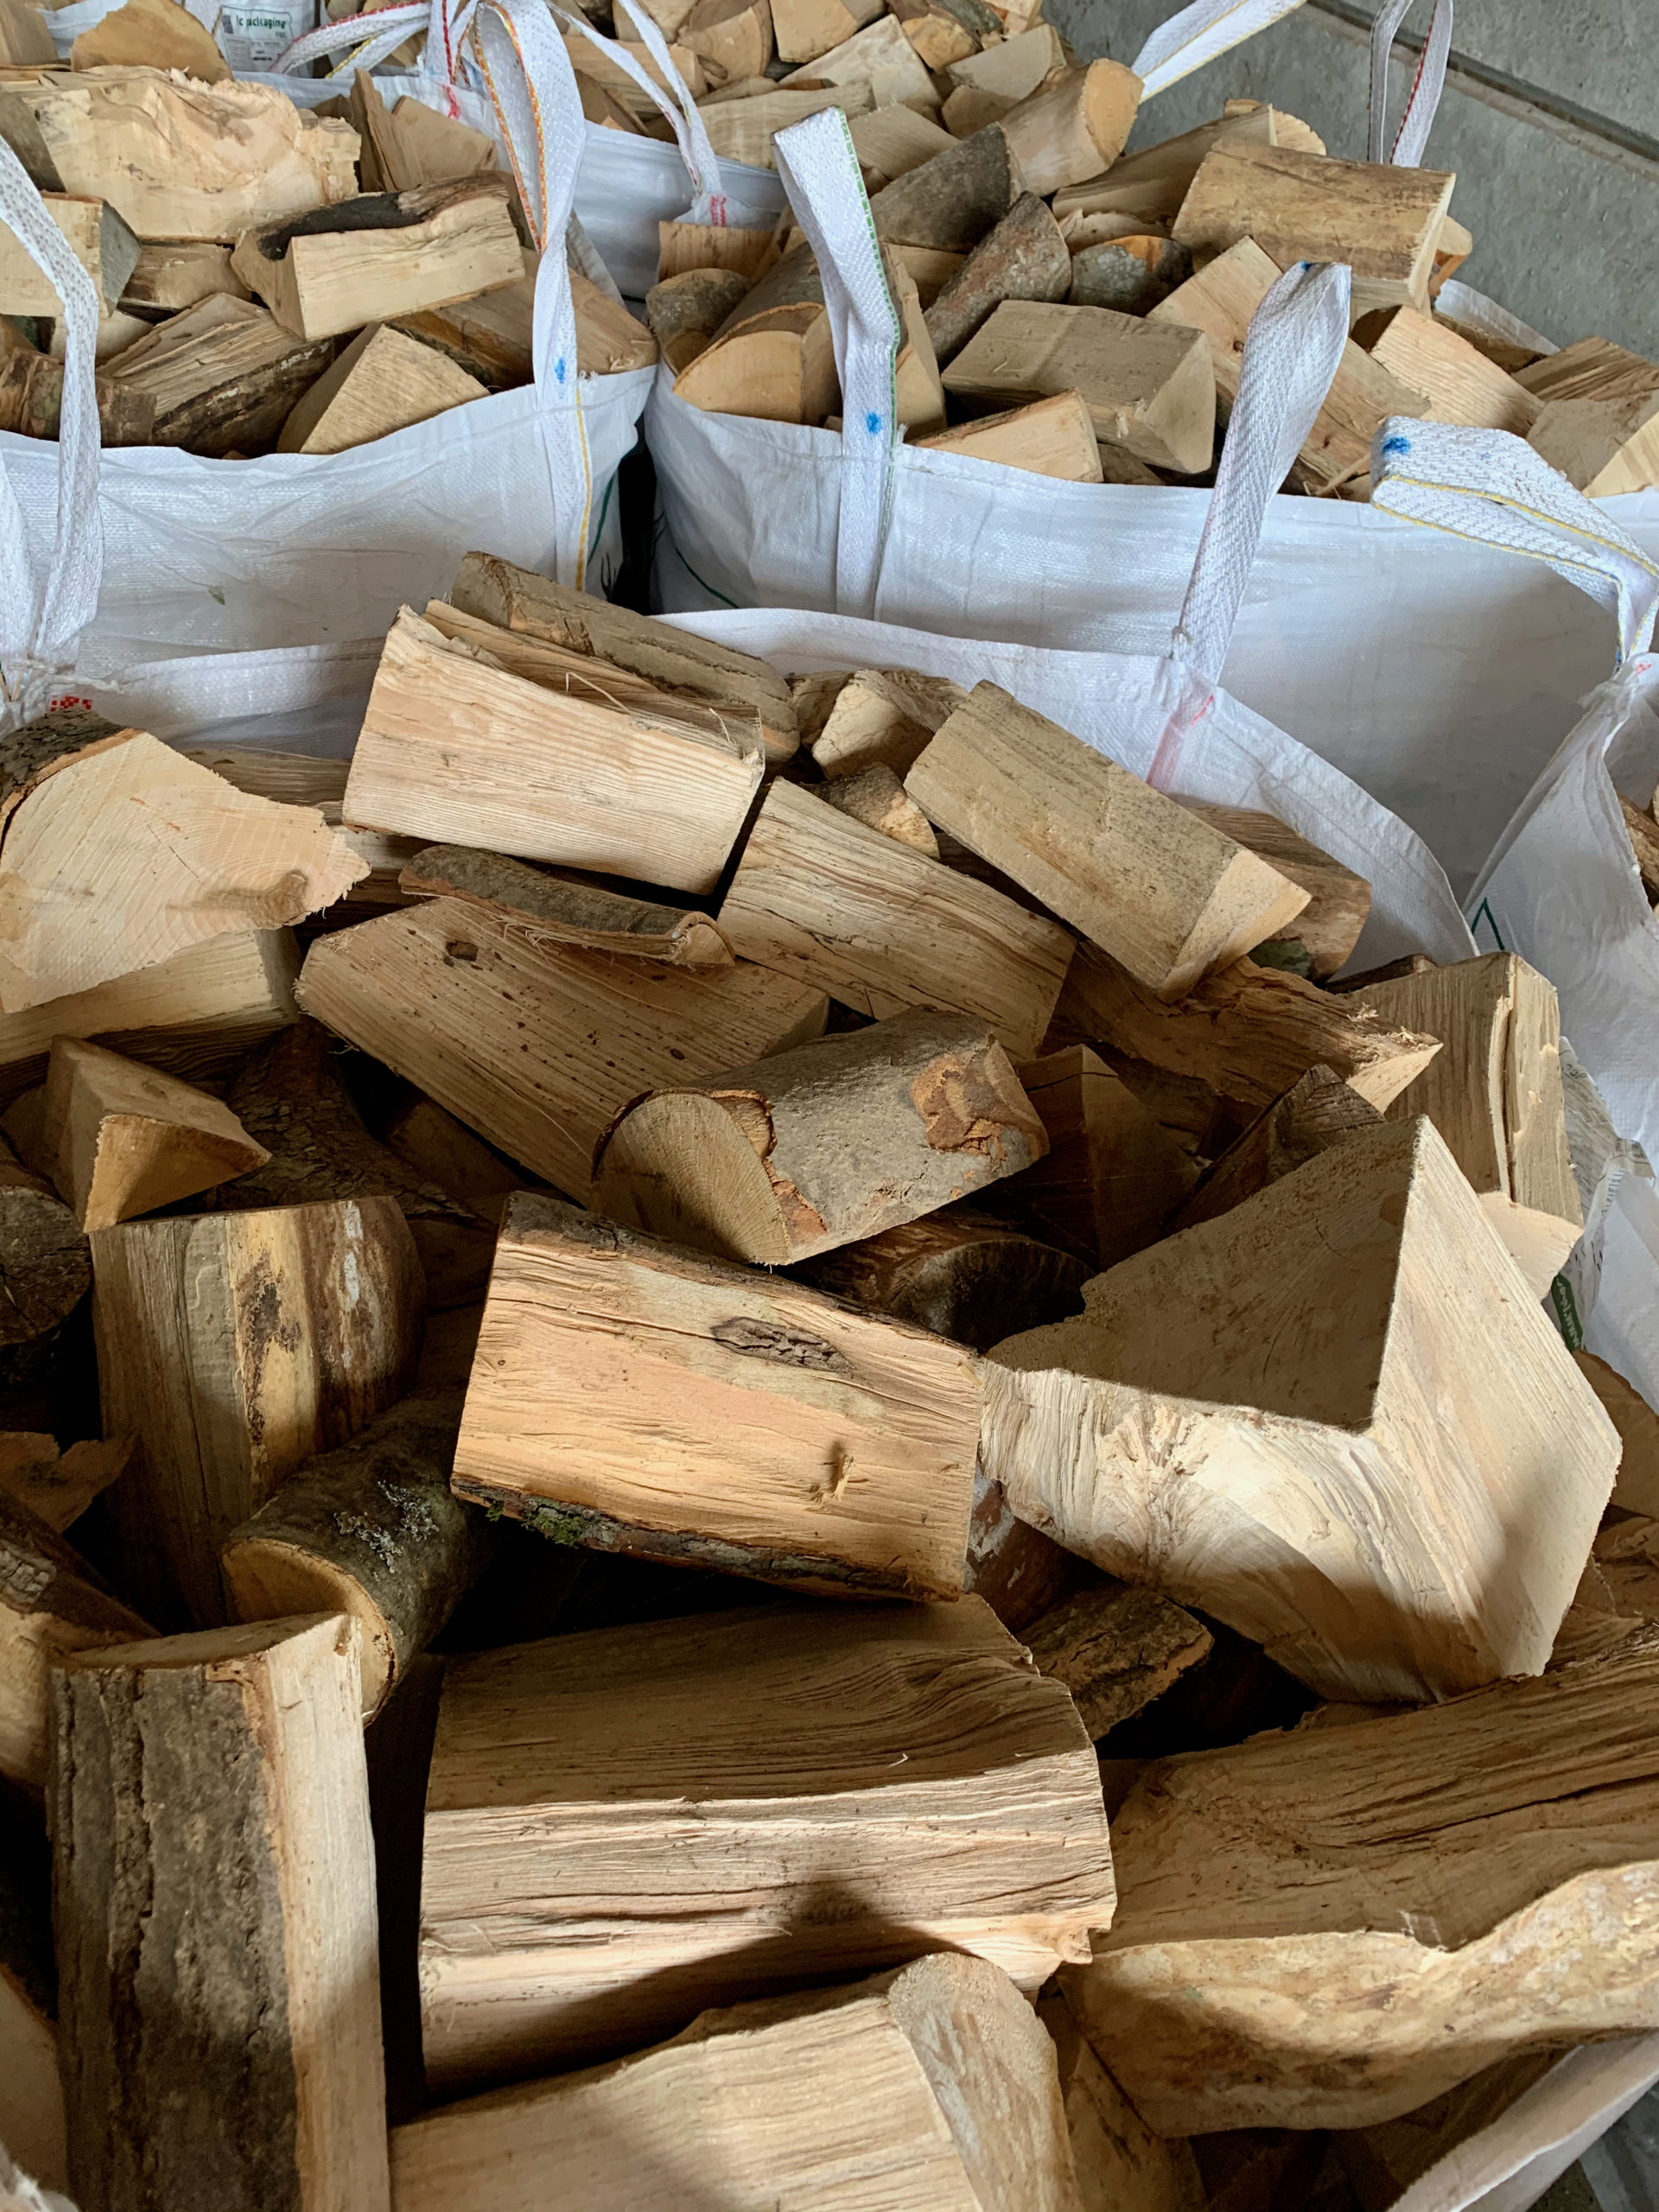 Kiln Dried Firewood Kindling Bundle